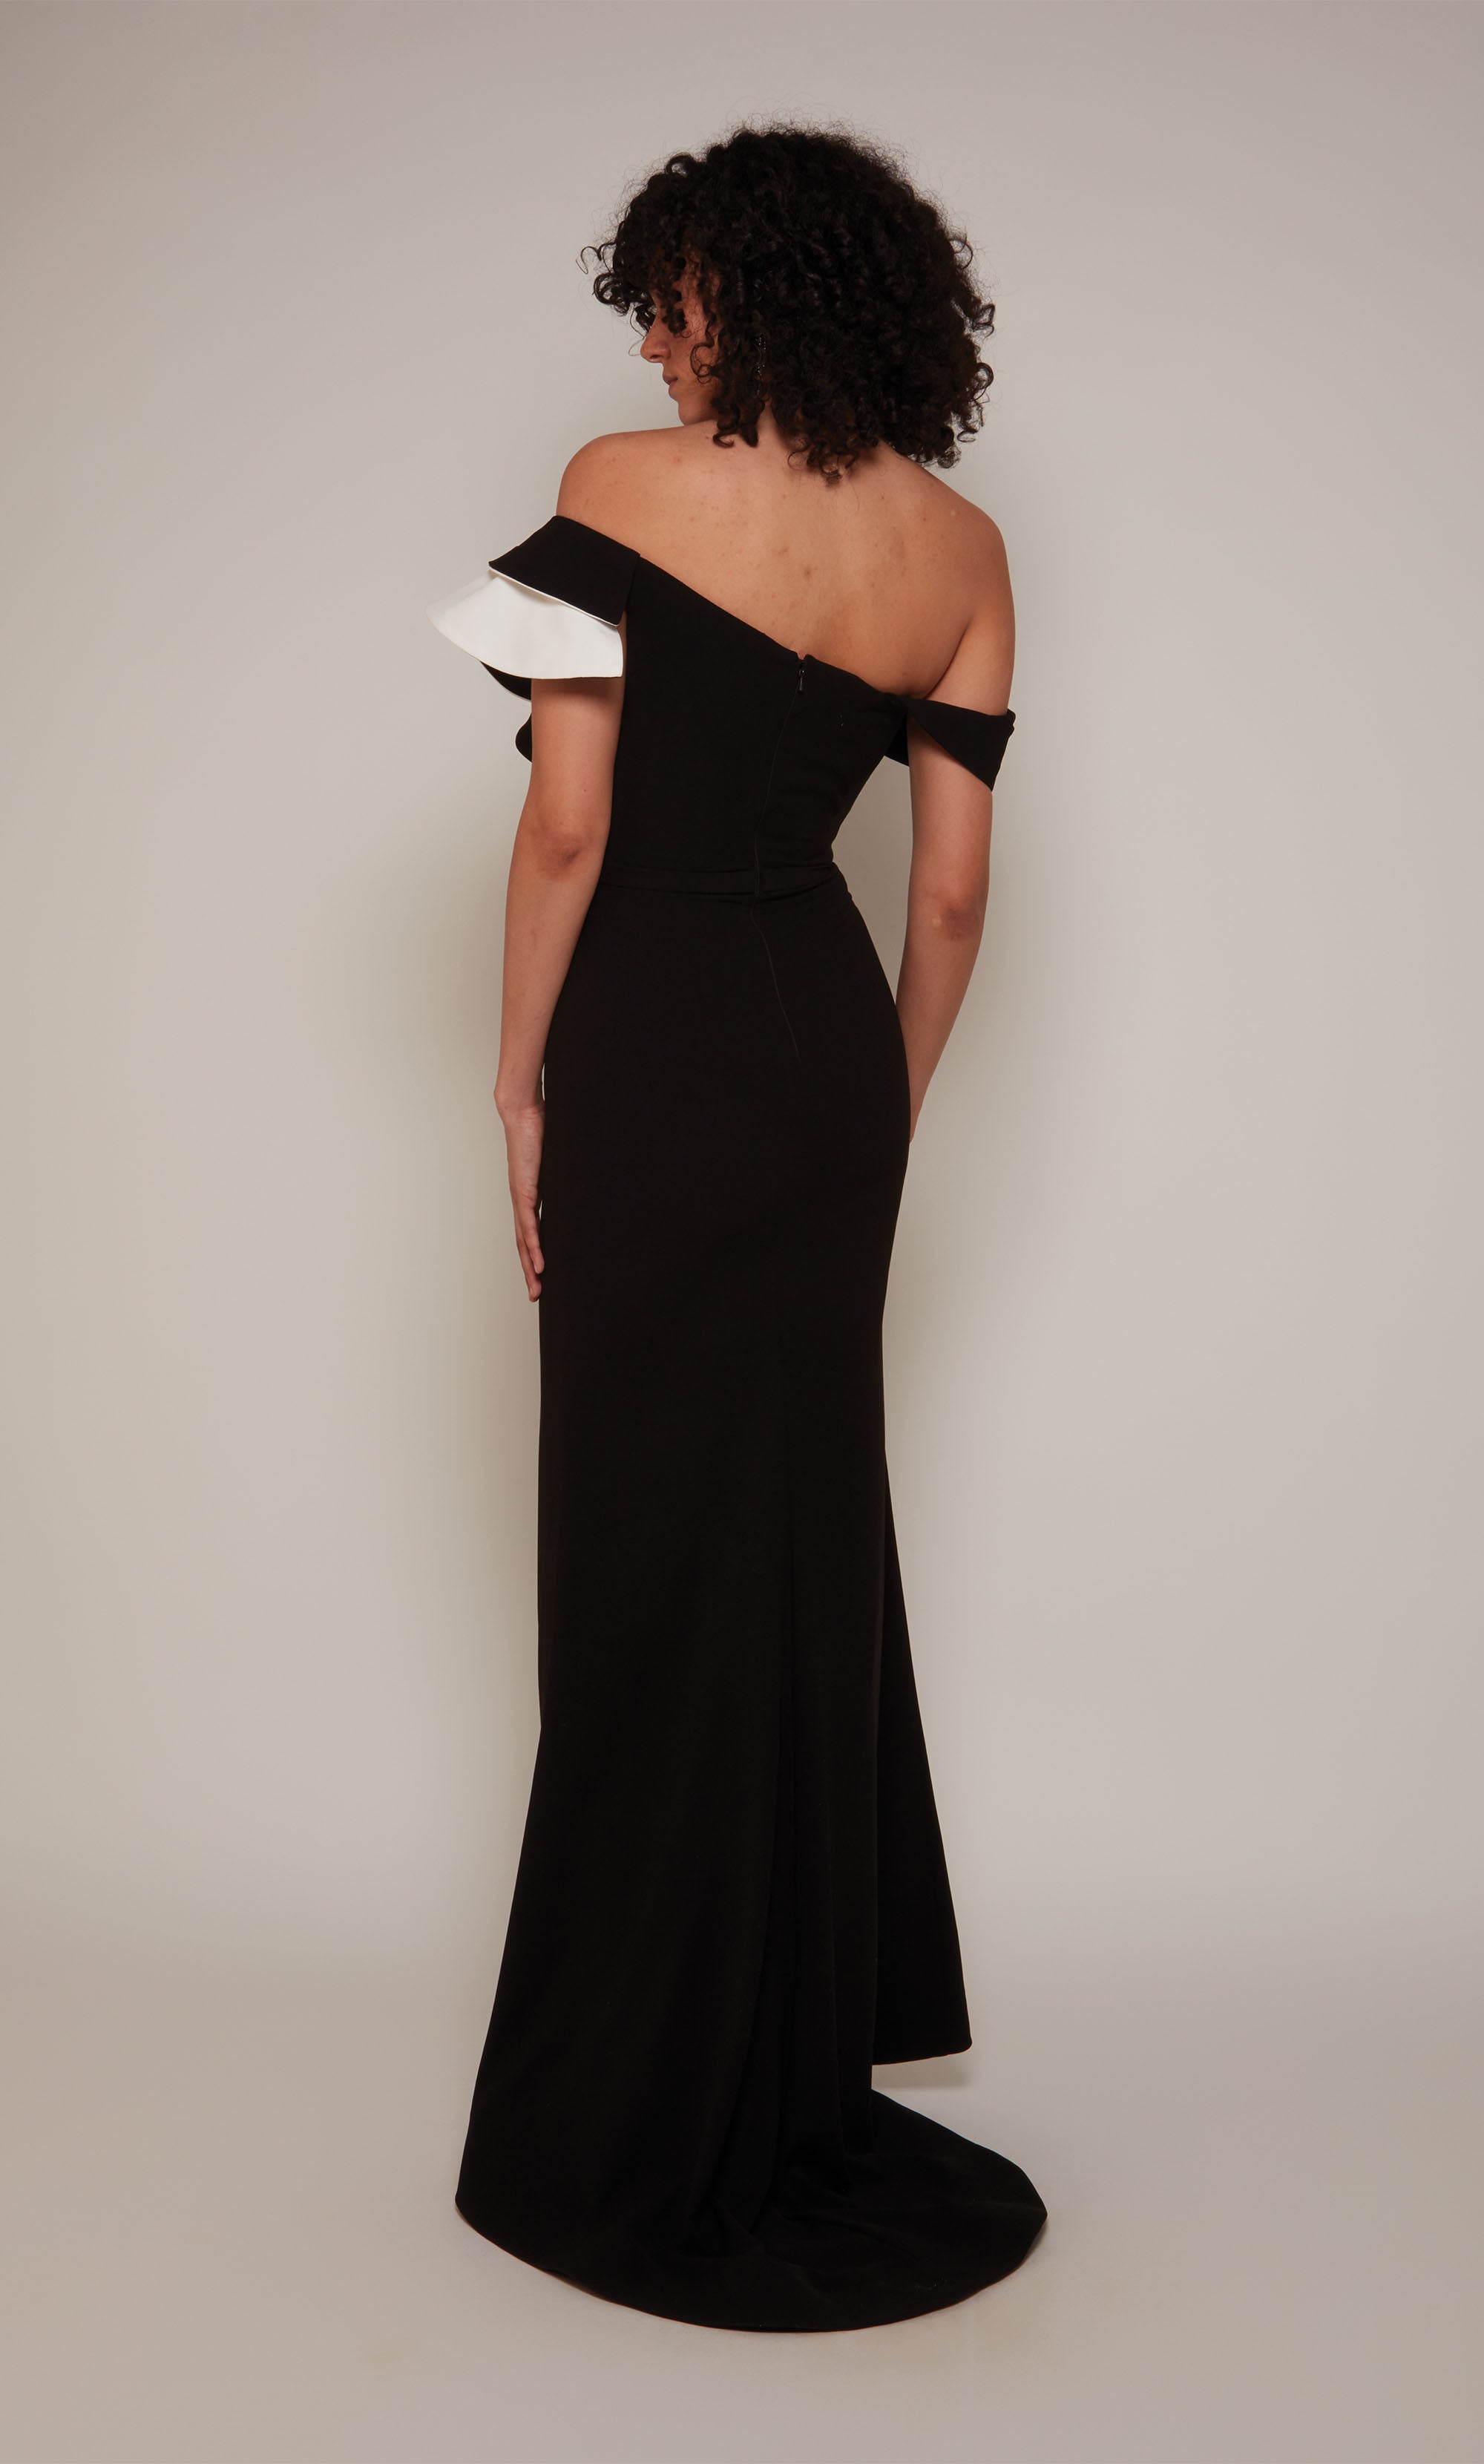 Buy FOXDX Women's Georgette A-Line Maxi Dress (Medium, Black) at Amazon.in